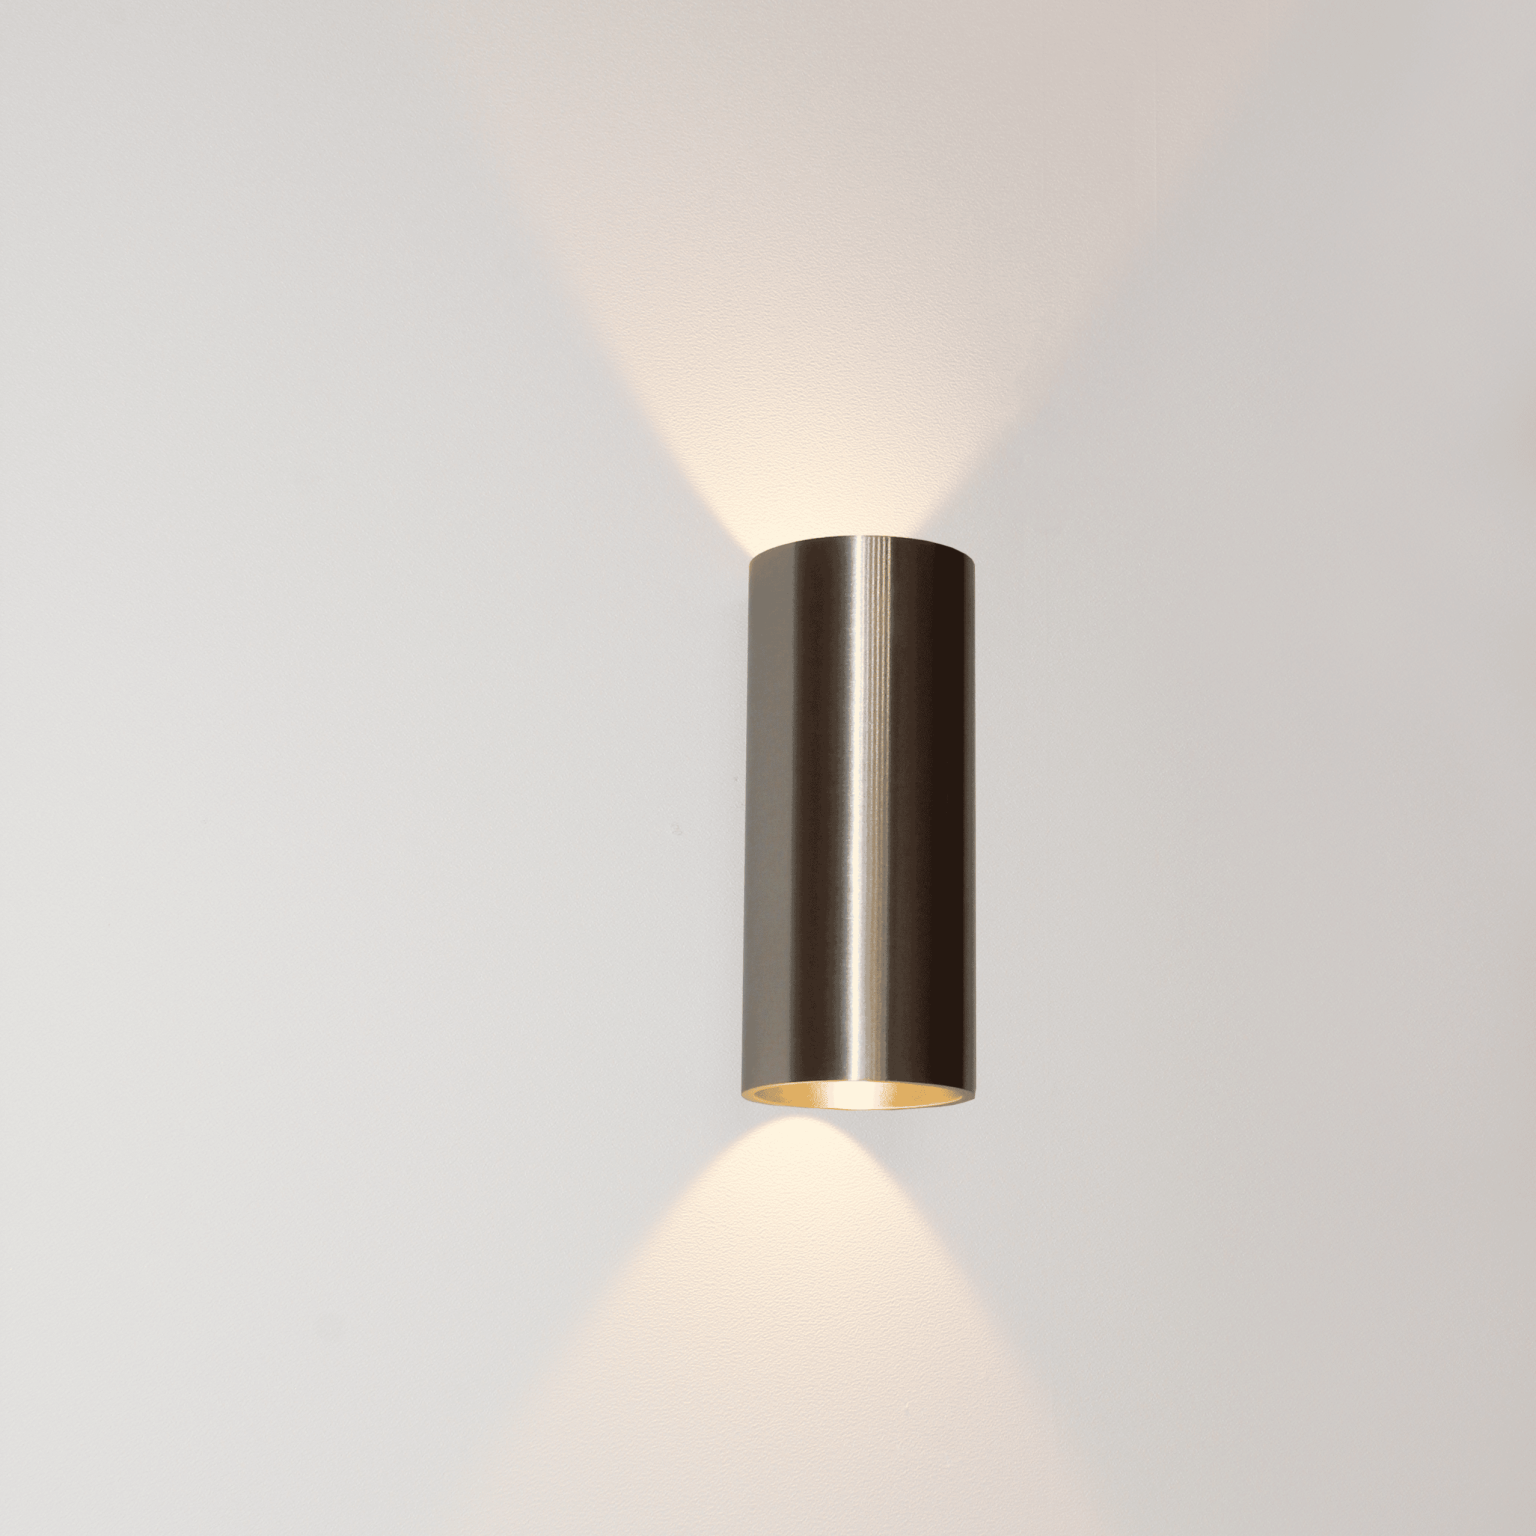 Brody 2 aluminium wandlamp buitenlamp downlight artdelight tuinextra